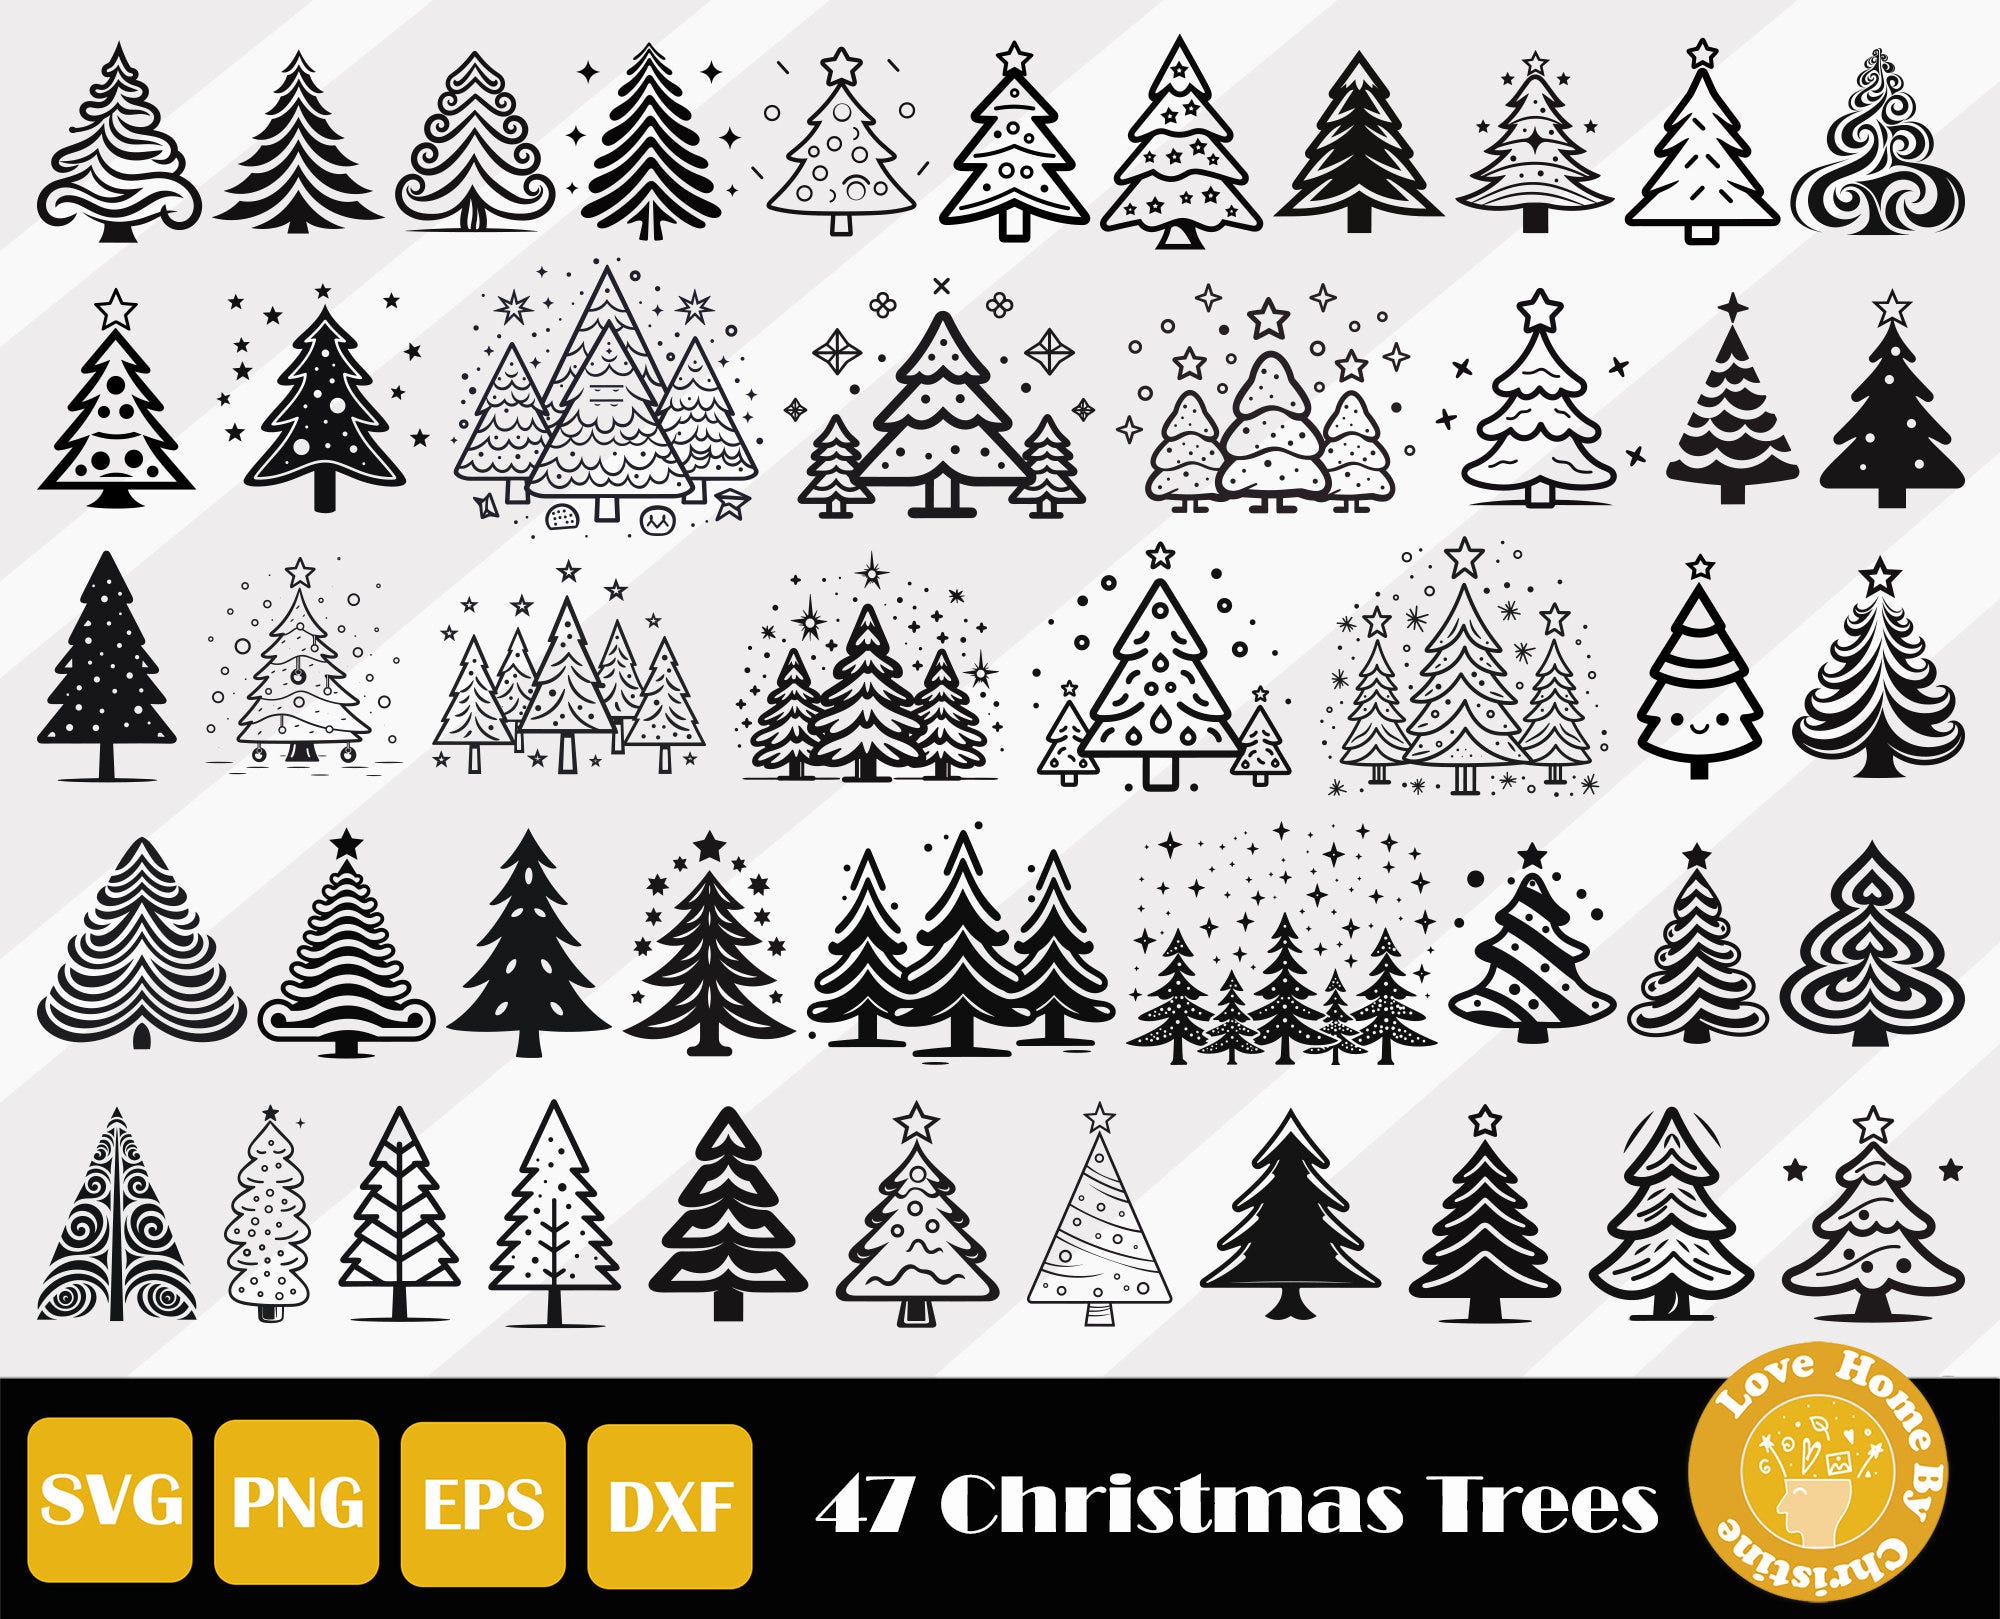 47 Christmas Tree Svg, Christmas Bundle Svg, Pine Tree Svg, Christmas Tree Png, Christmas Tree Dxf, Christmas Clipart, Instant Download